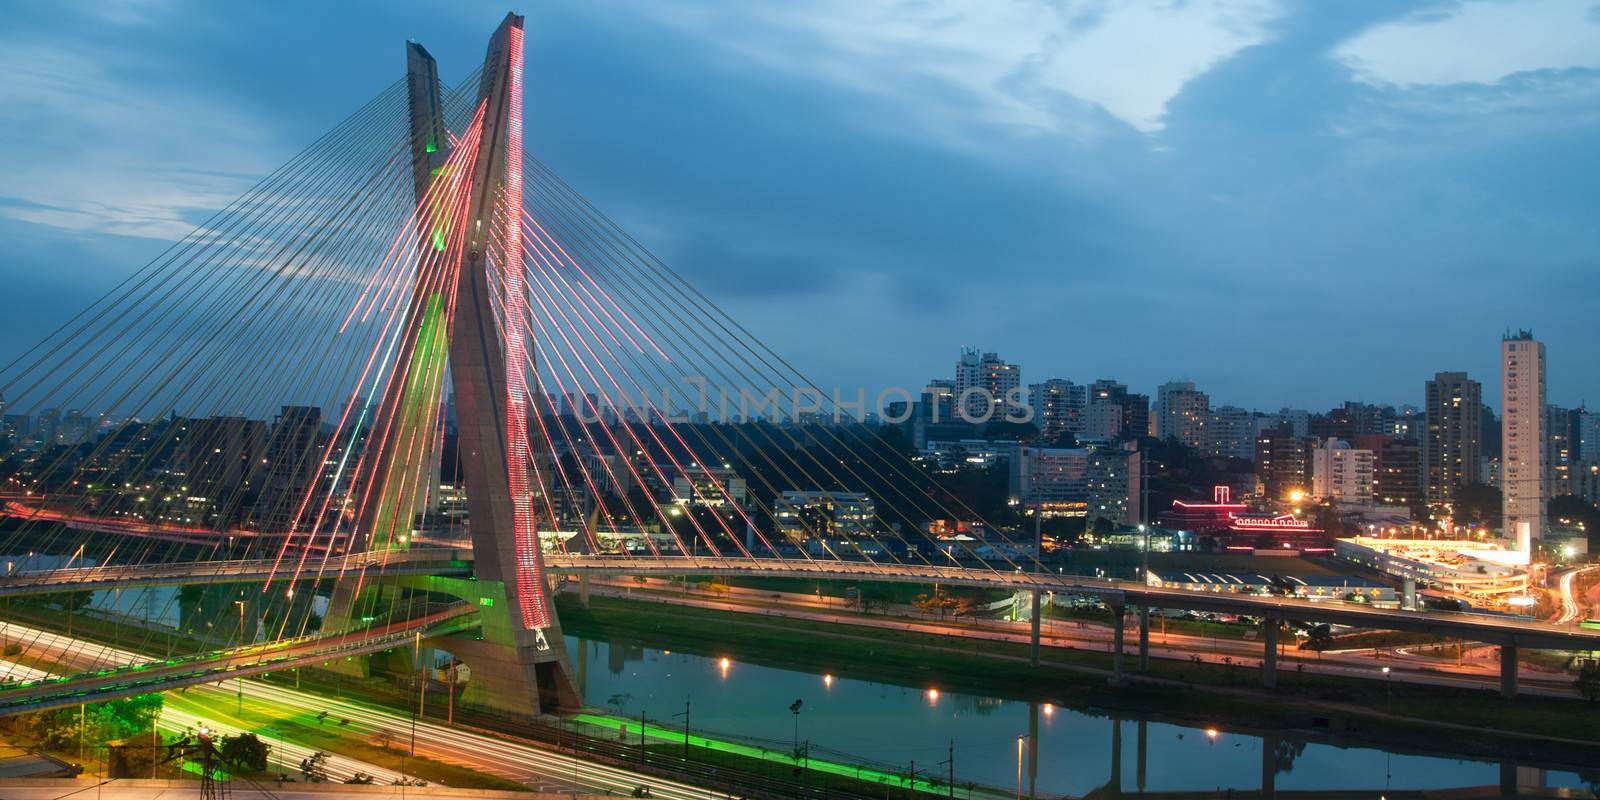 Sao Paulo city bridge at night by CelsoDiniz